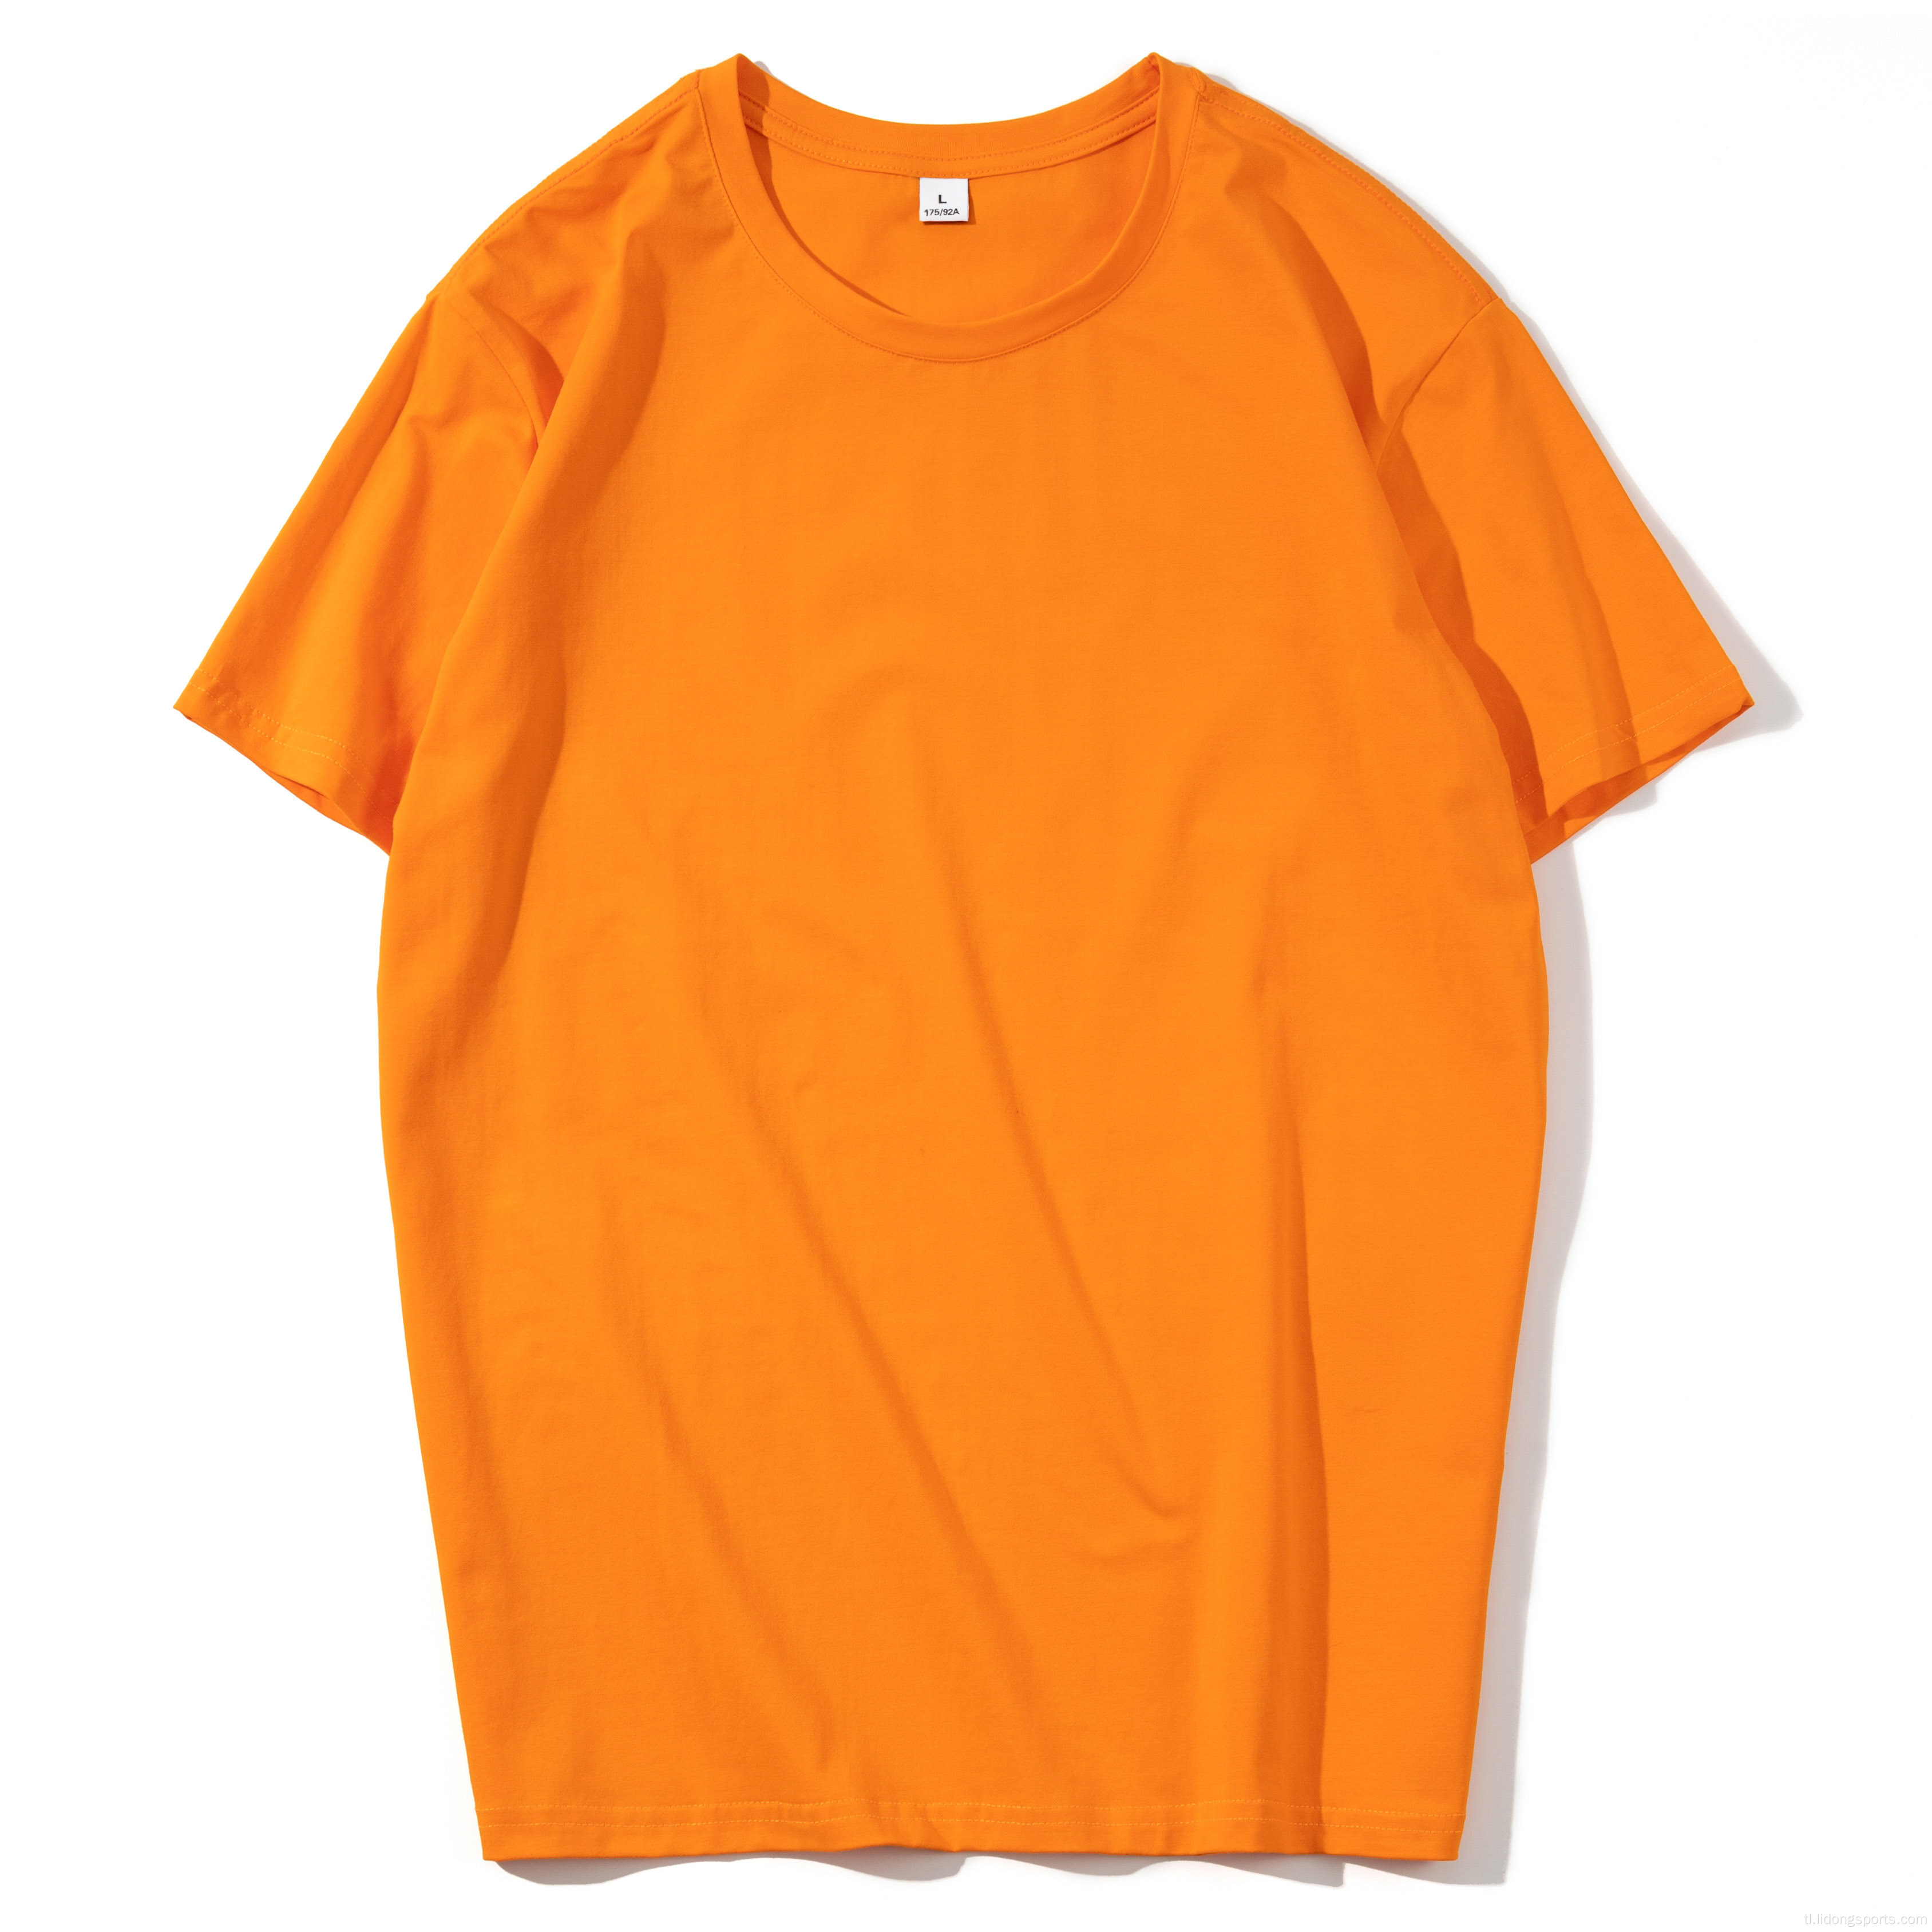 Mga T-Shirt ng Lalaki na Unisex Plain 100% Cotton Oversized T-Shirt